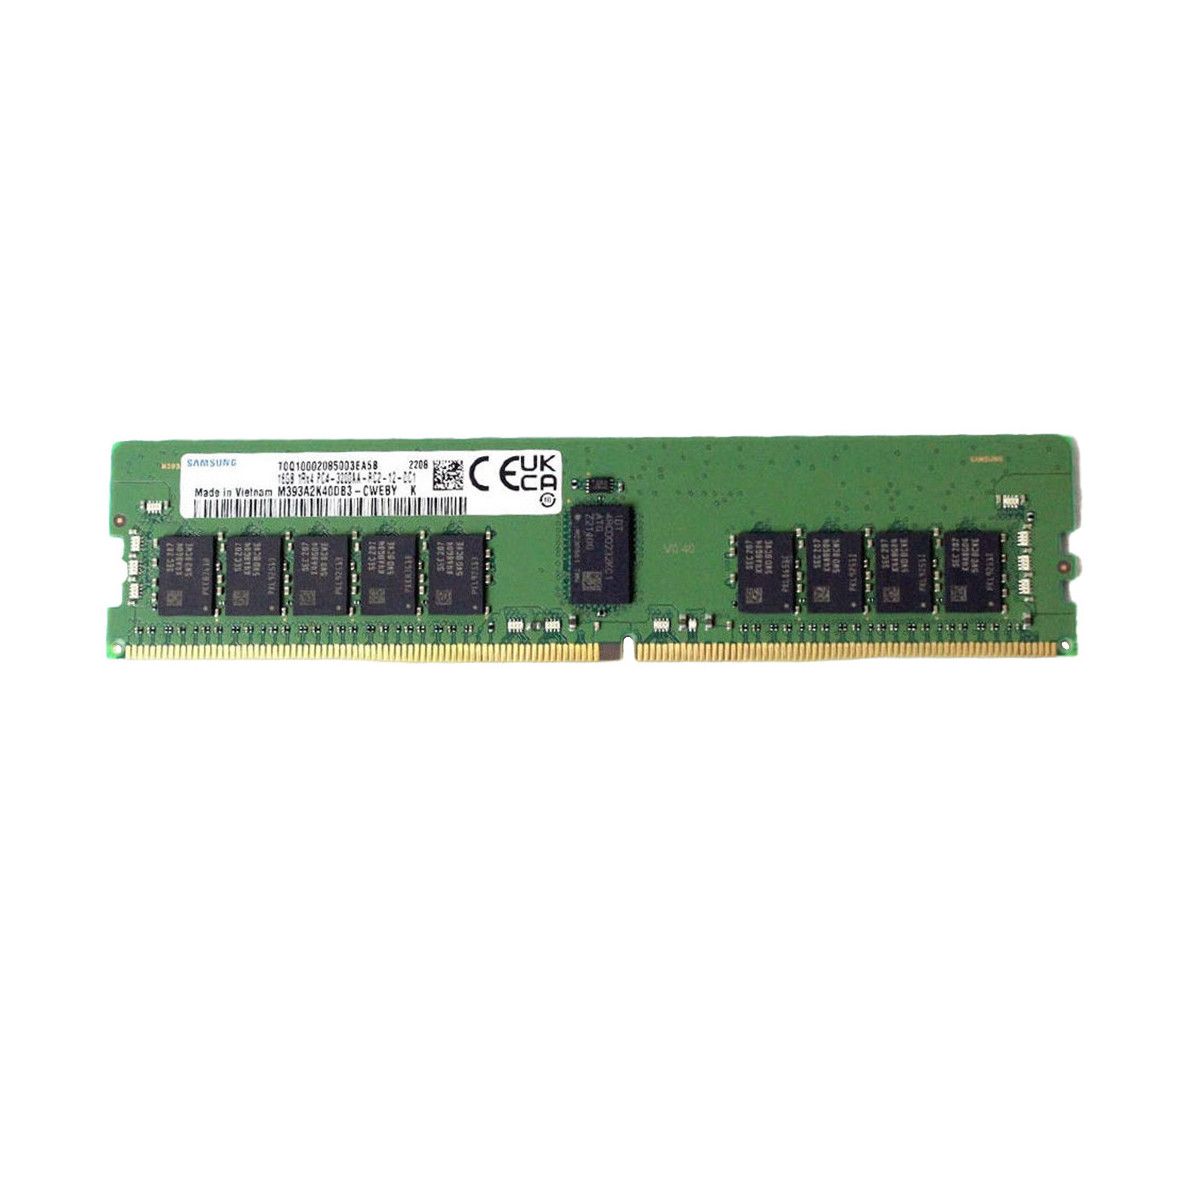 UCSX-MR-X16G1RW-MS - Memstar 1x 16GB DDR4-3200 RDIMM PC4-25600R - Mem-Star Kompatibel OEM Speichermedien 1 - Memstar 